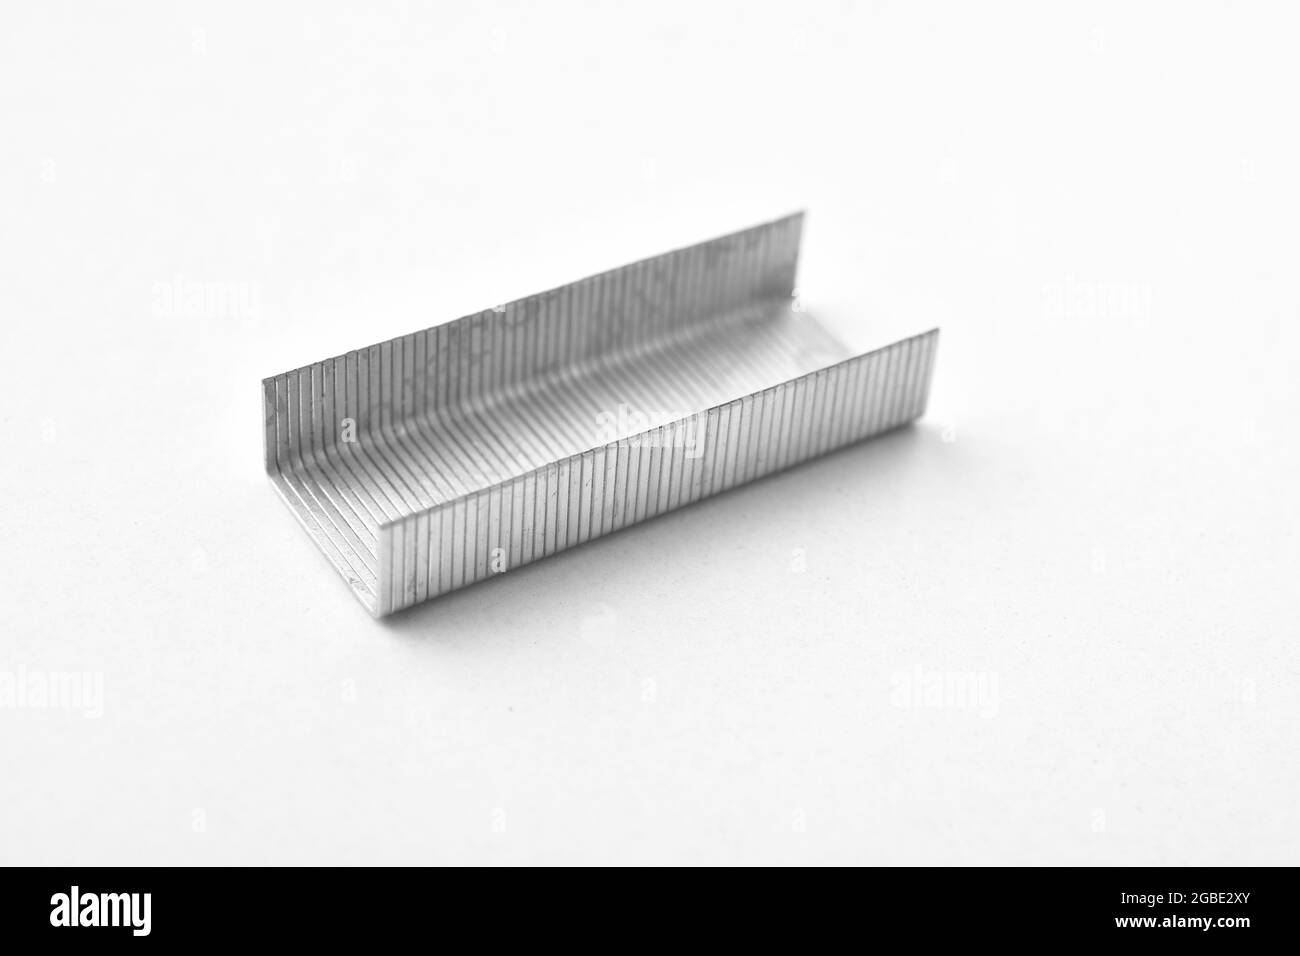 Single stripe Of Stapler Pin Isolated On White background Stock Photo